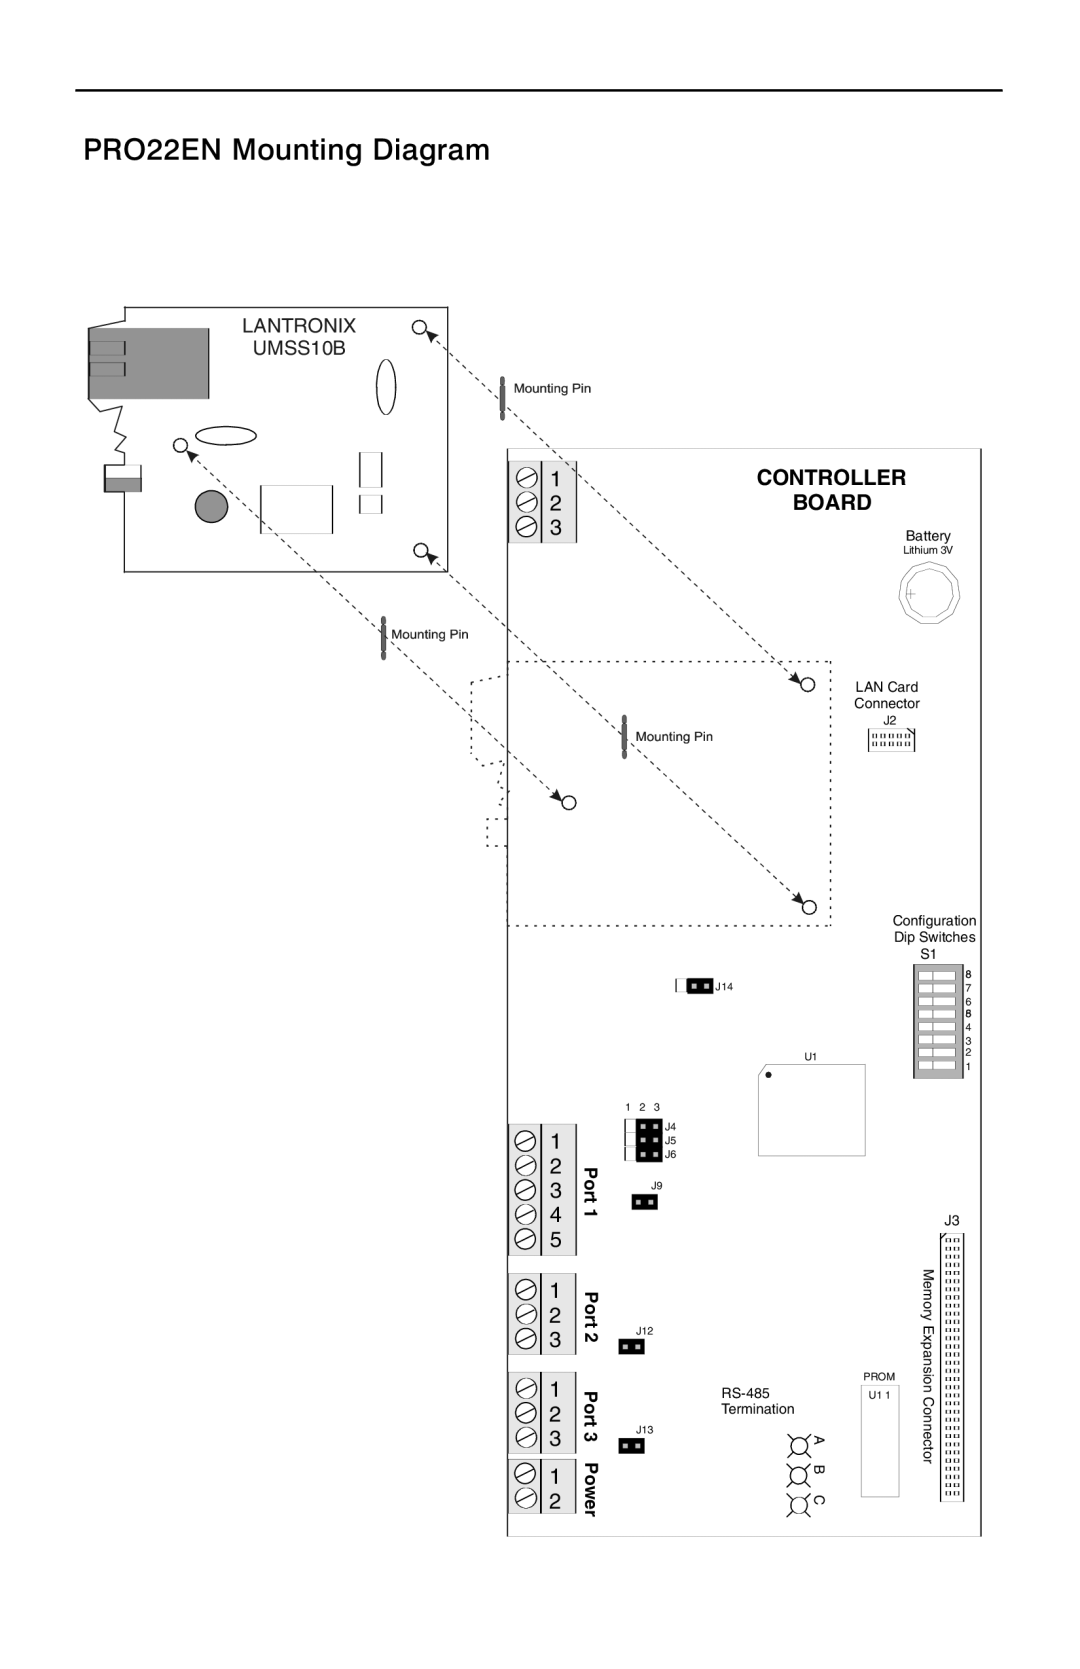 Honeywell PRO-2200 PRO22EN Mounting Diagram, Controller Board, 3 1 2 3 4 5, LANTRONIX UMSS10B, Po rt 3 Po wer, Battery 